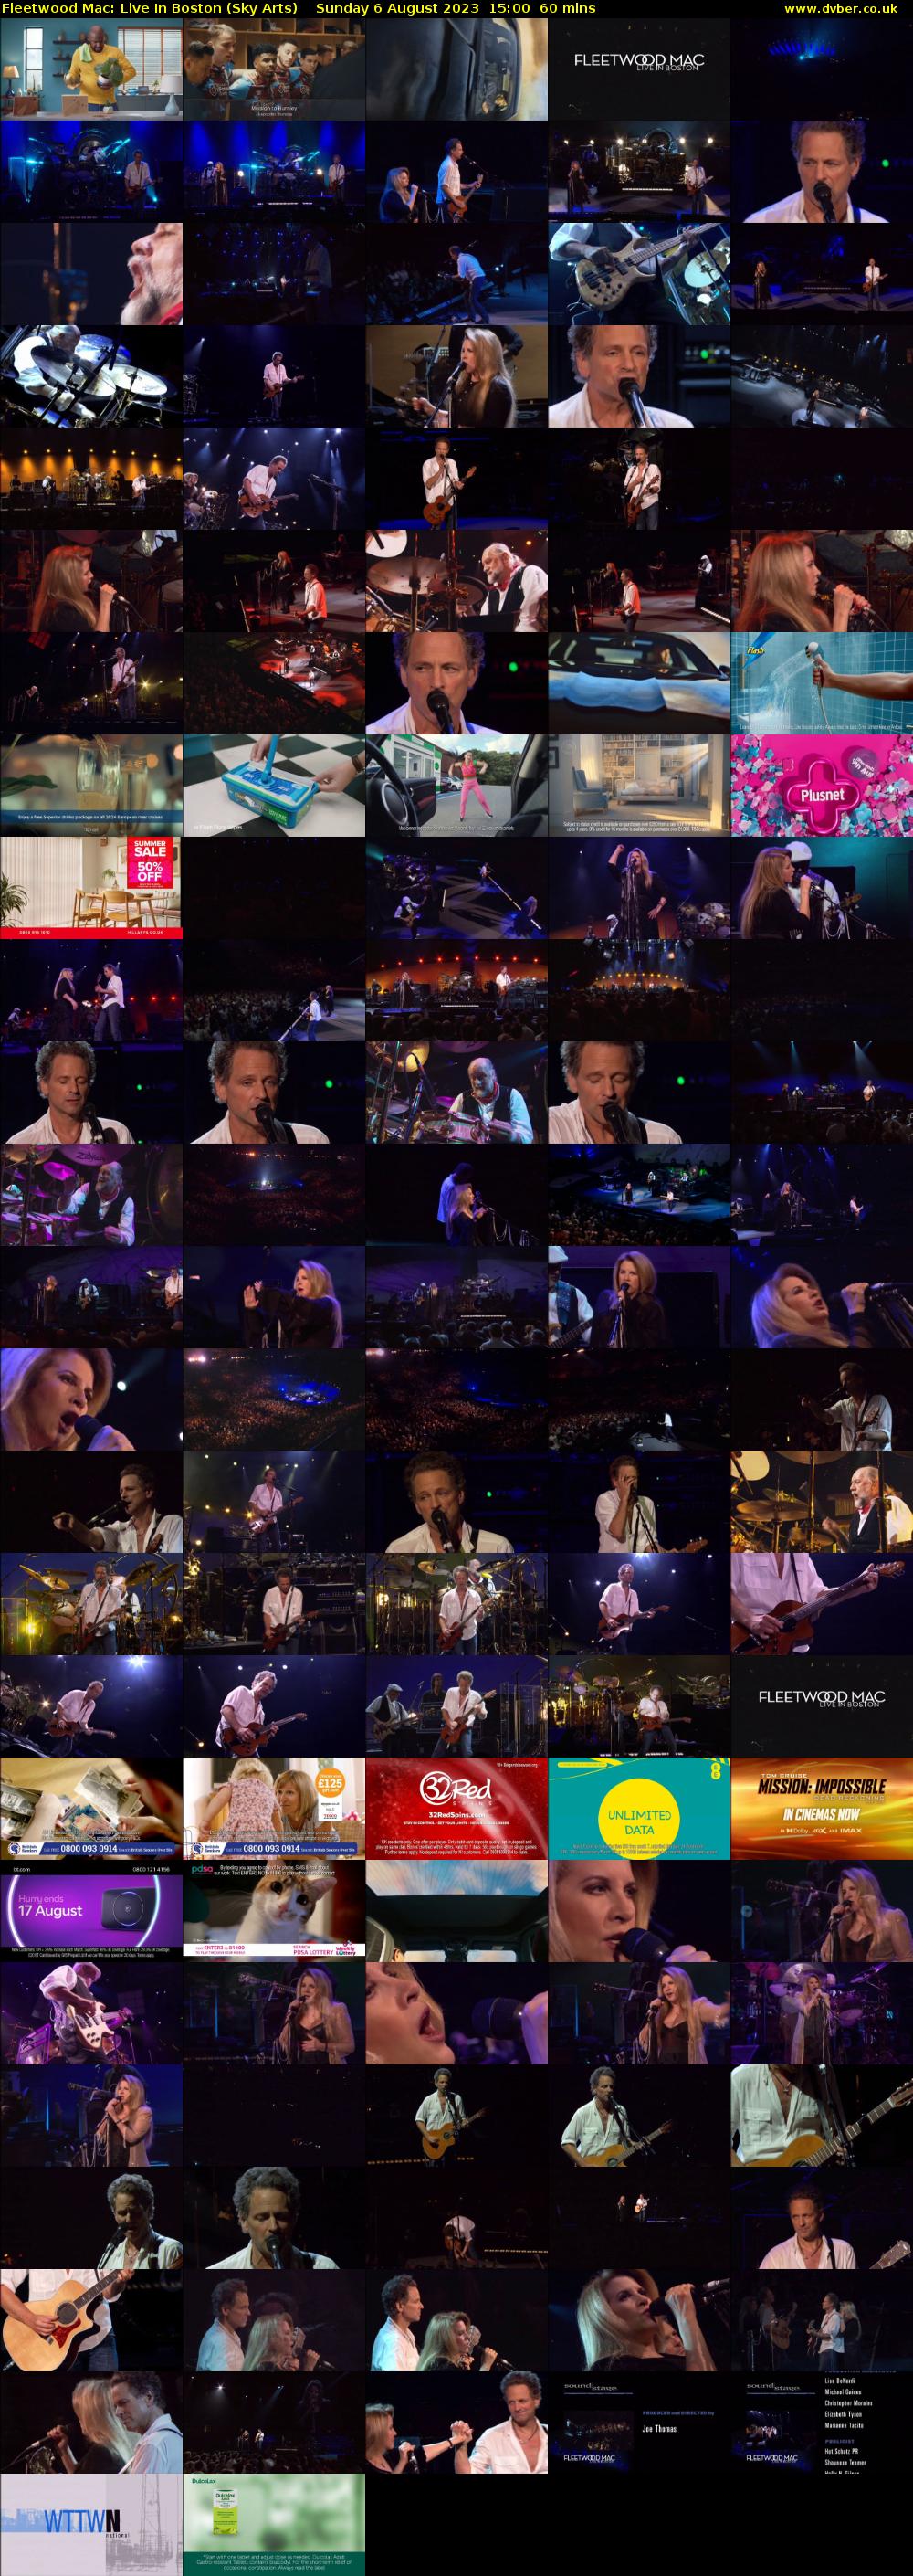 Fleetwood Mac: Live In Boston (Sky Arts) Sunday 6 August 2023 15:00 - 16:00